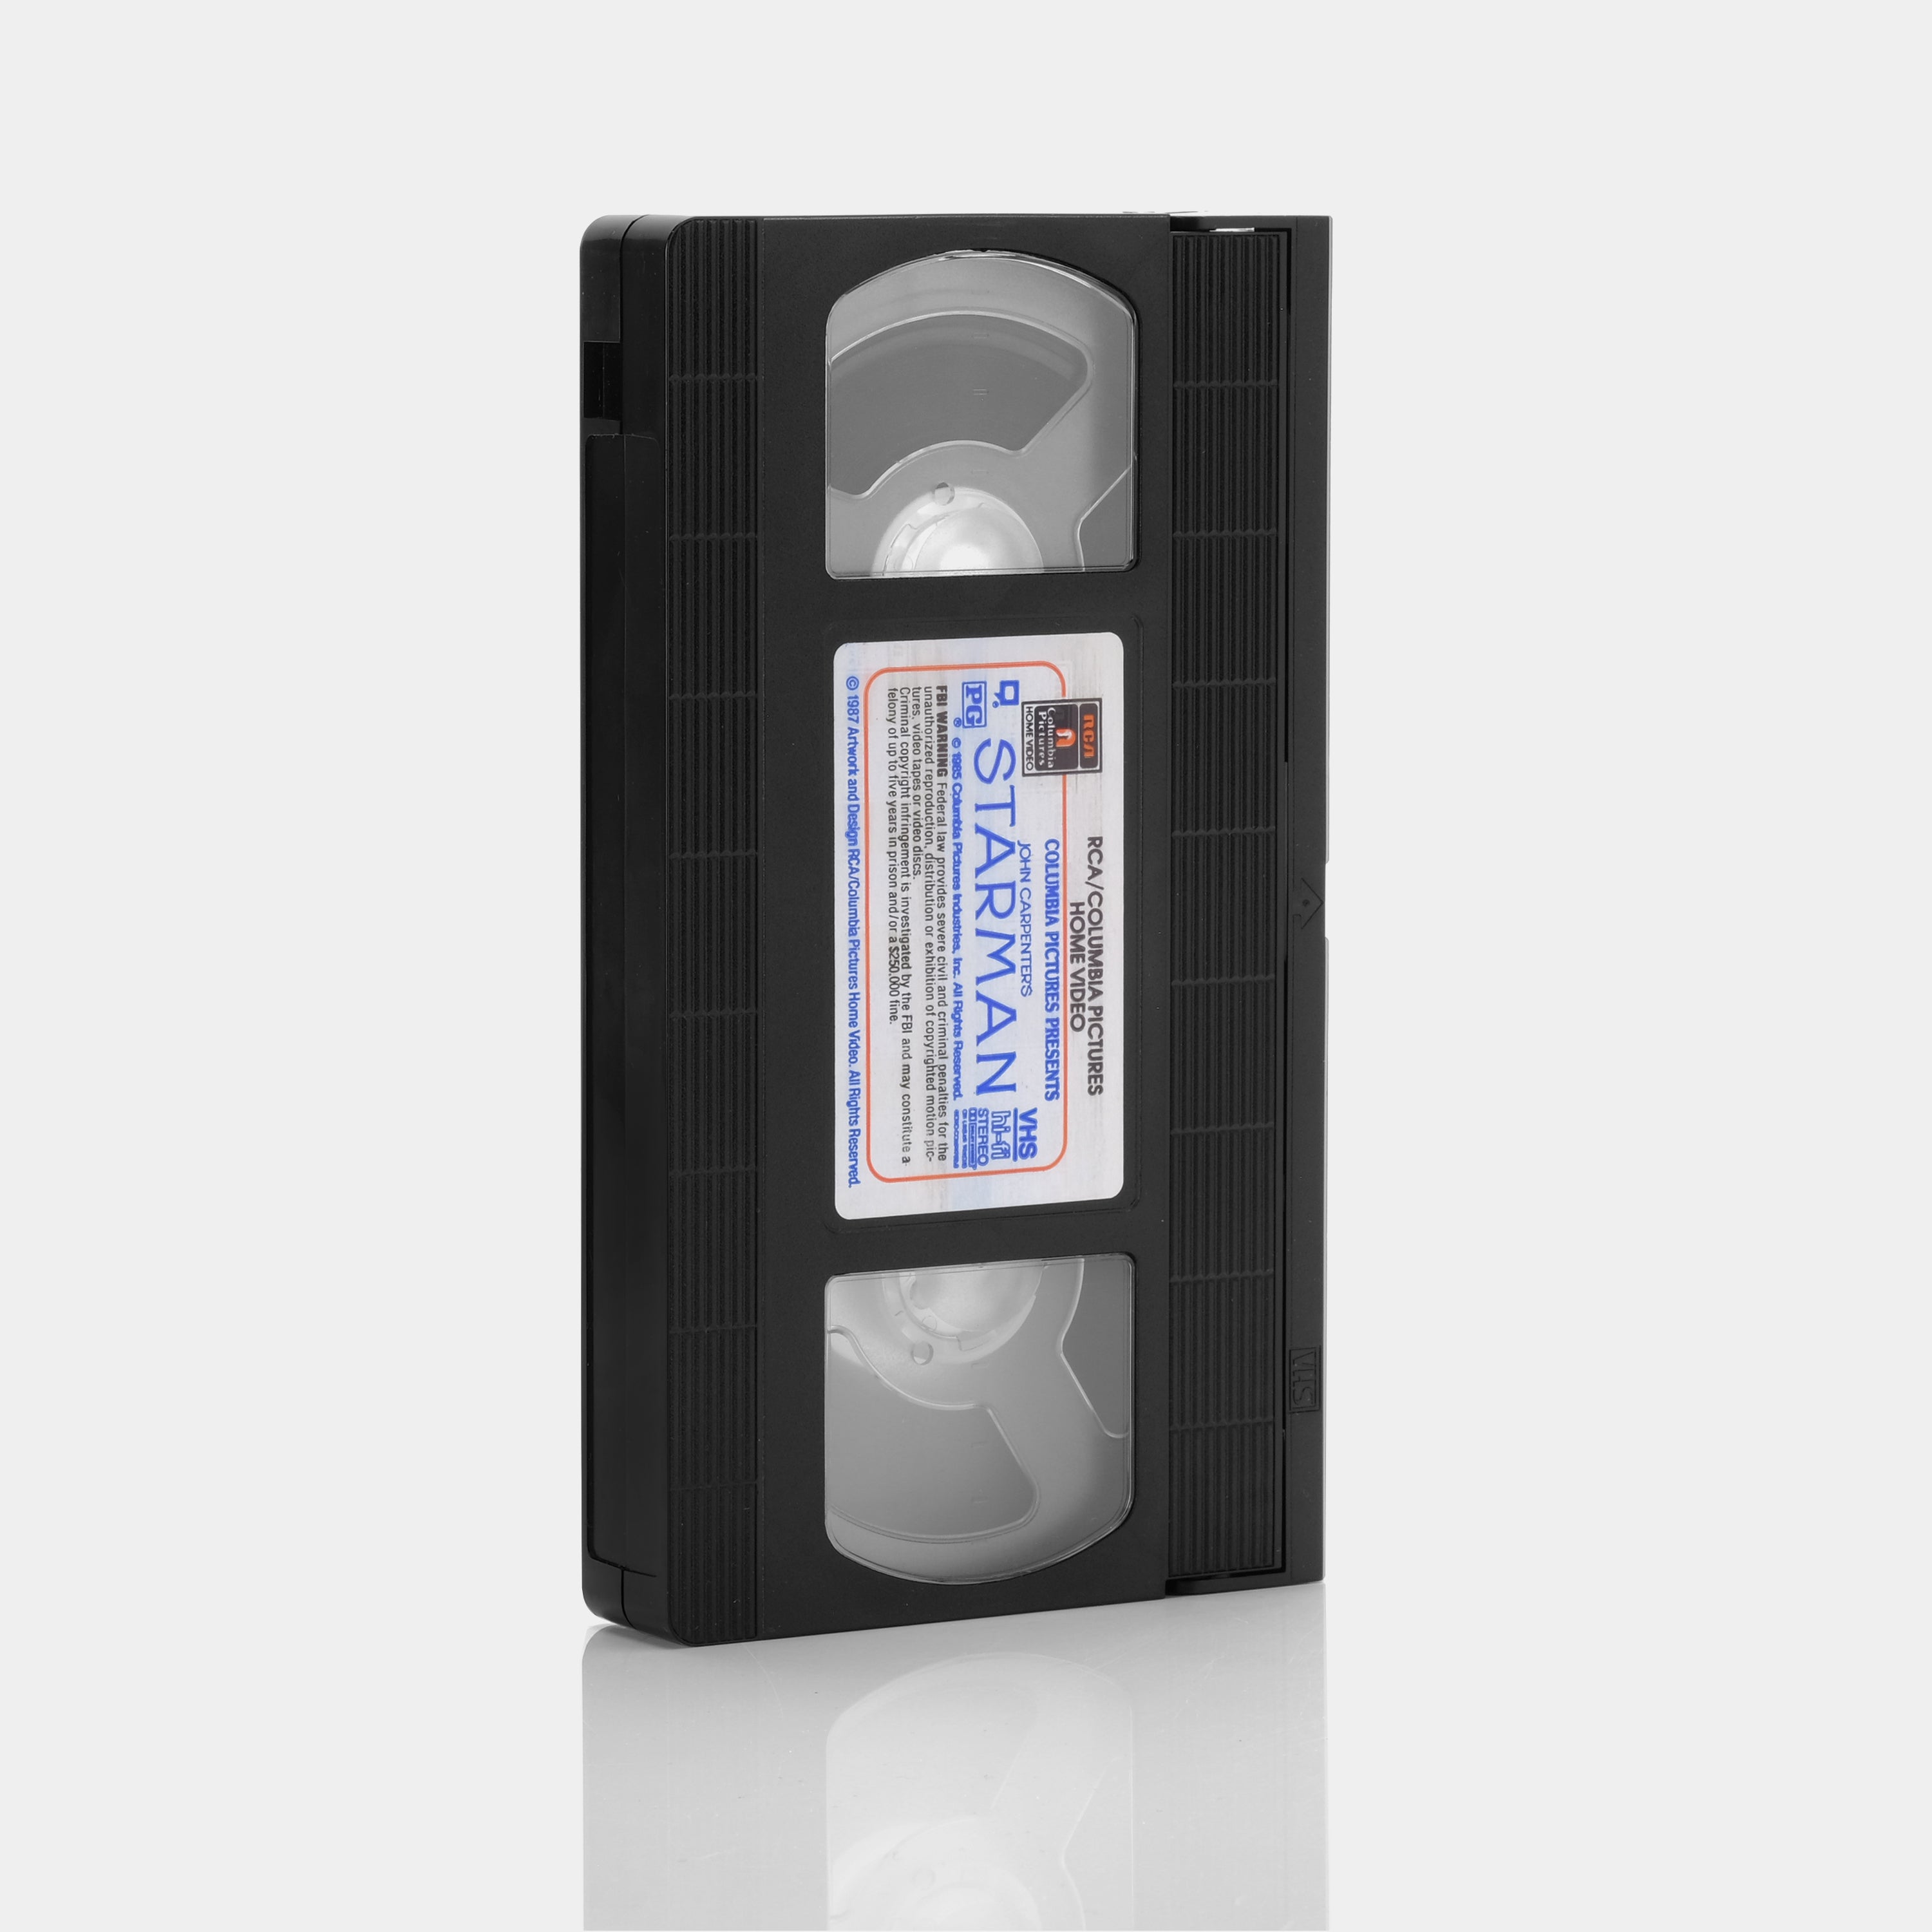 Starman VHS Tape